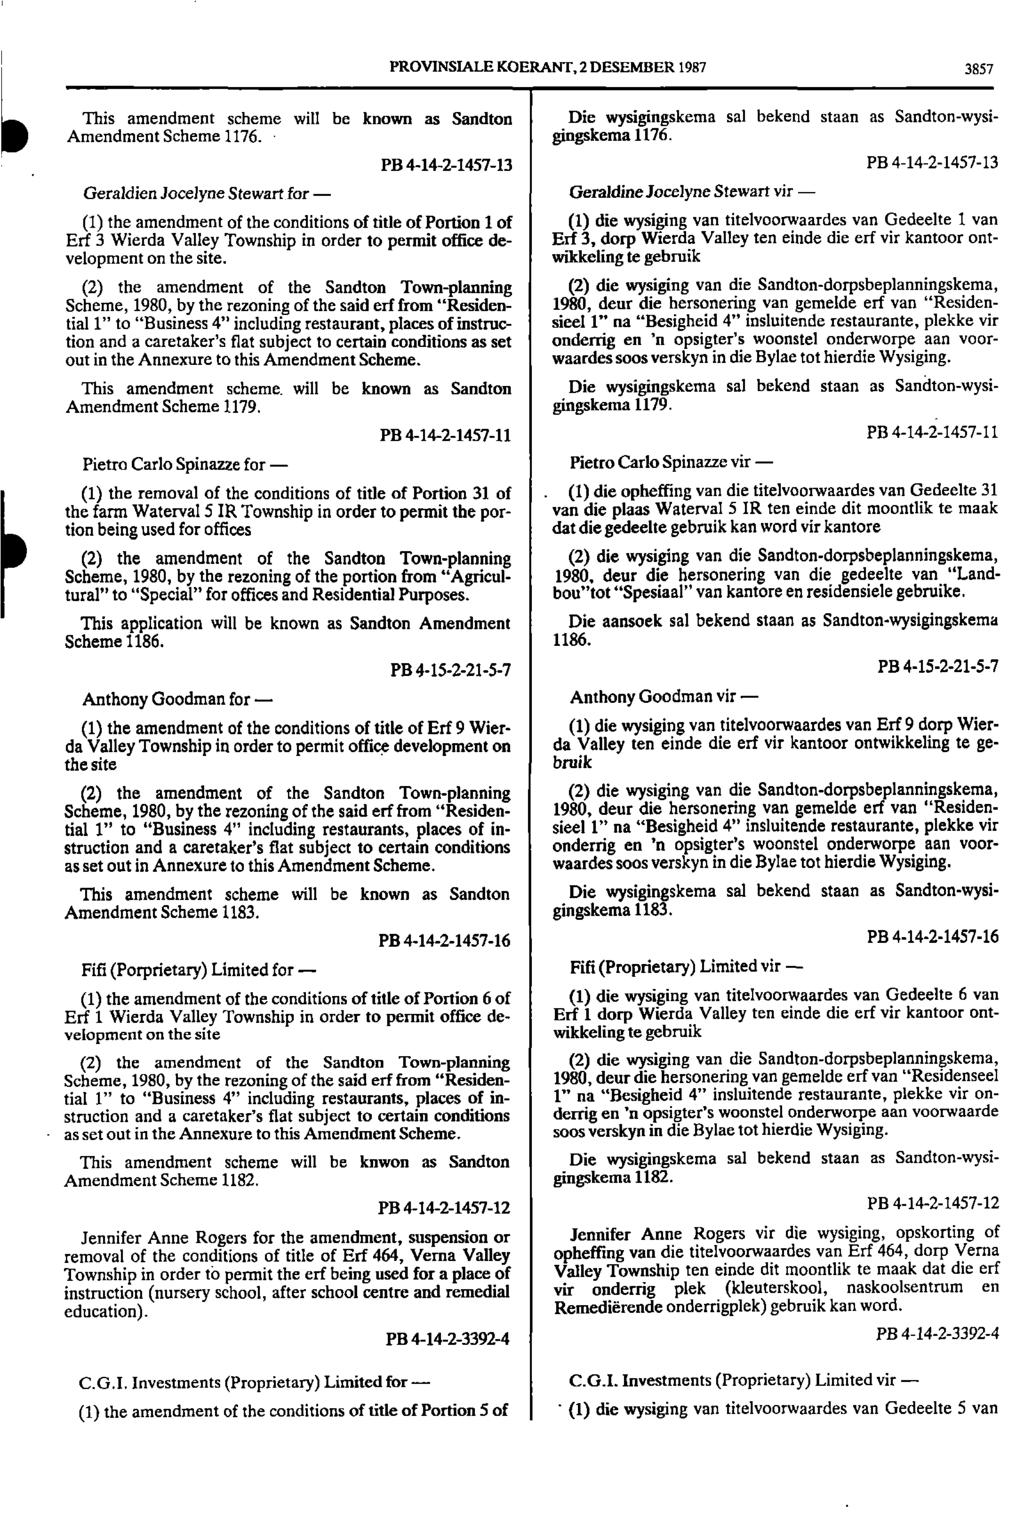 1987 3857 1111 This amendment scheme will be known PROVINS:toLdEKnOERANT, as Die 2 DESEMBER wysigingskema sal bekend staan as Sandtonwysi Amendment Scheme 1176. gingskema 1176.